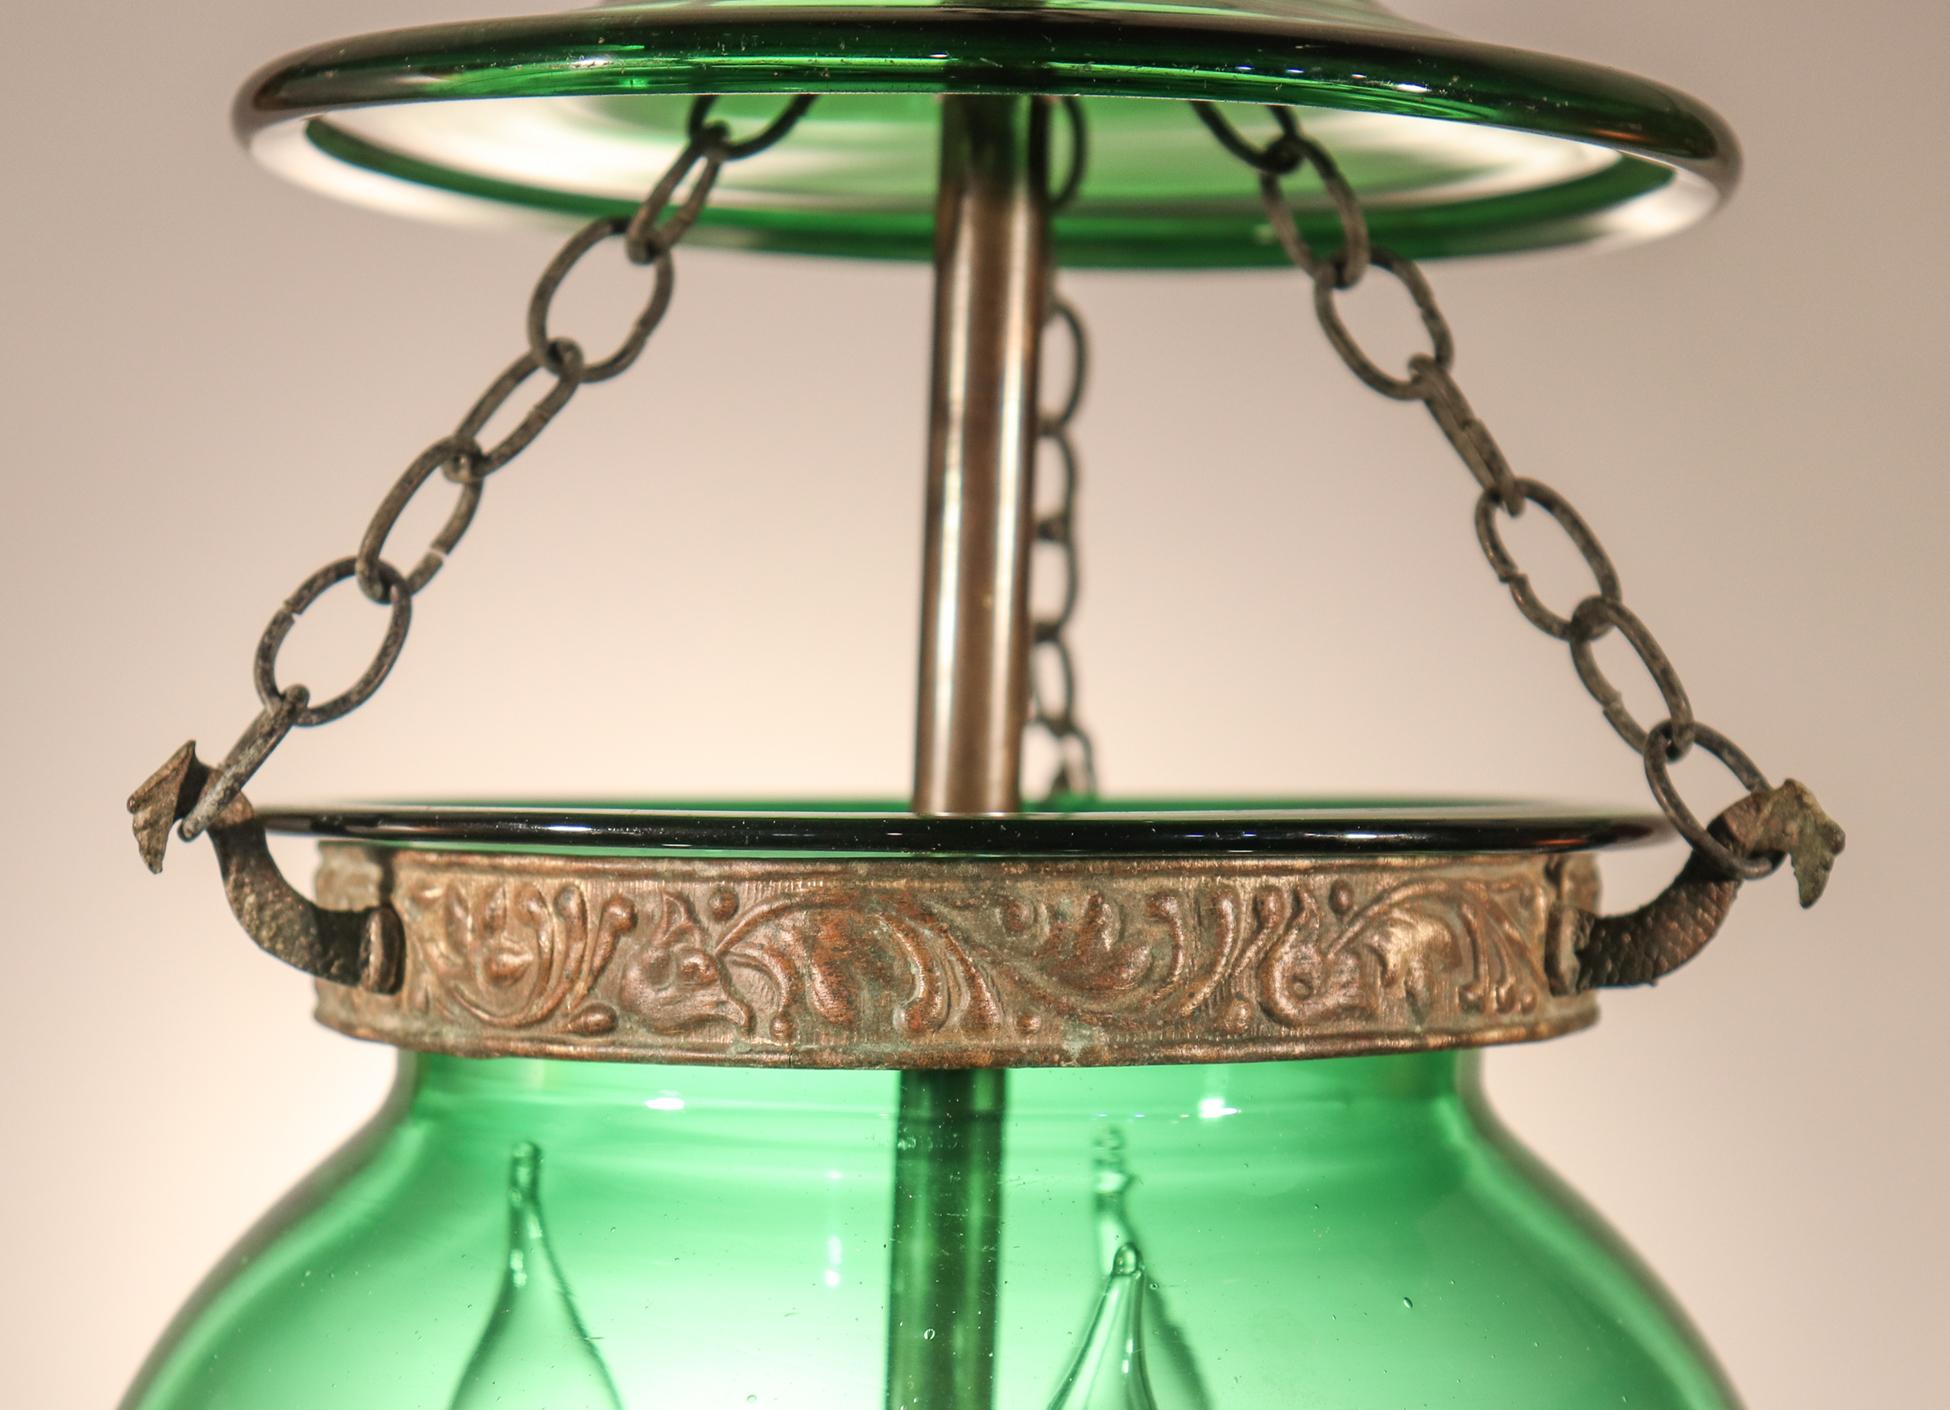 Embossed Antique Emerald Green Glass Globe Bell Jar Lantern